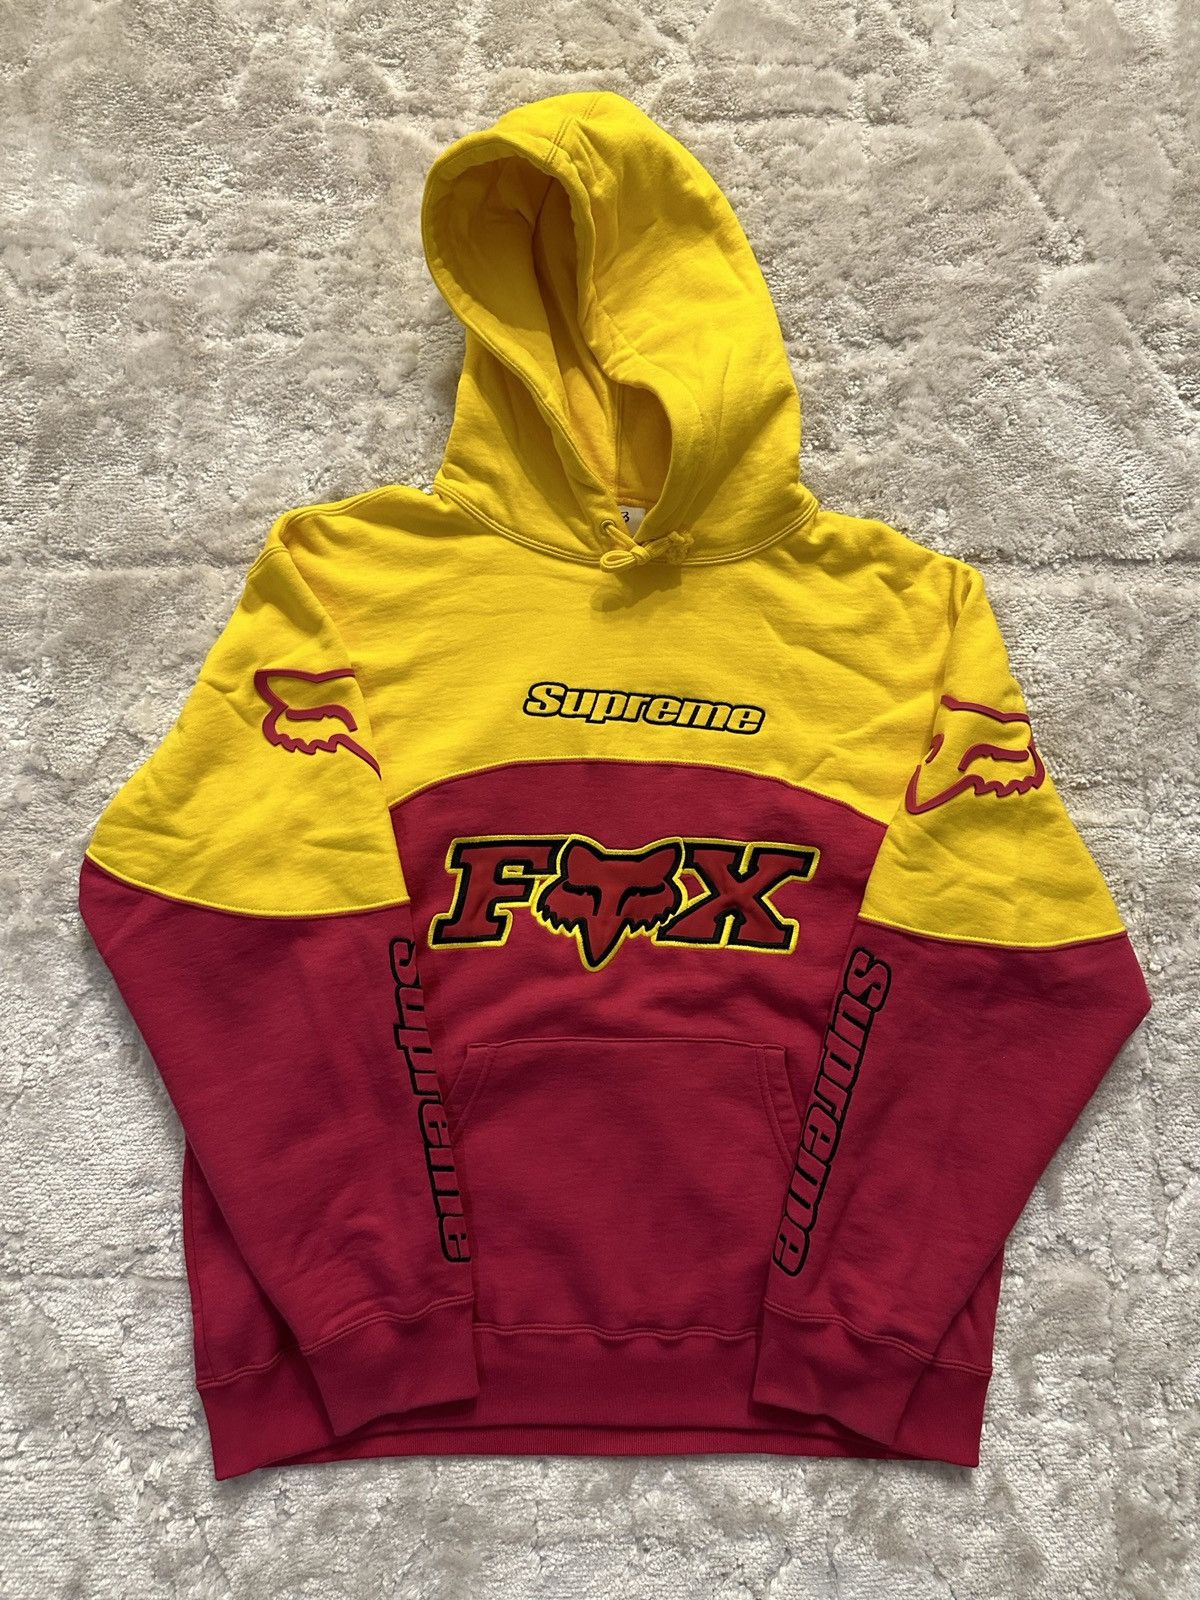 Supreme Supreme/Fox Racing Hooded Sweatshirt | Grailed